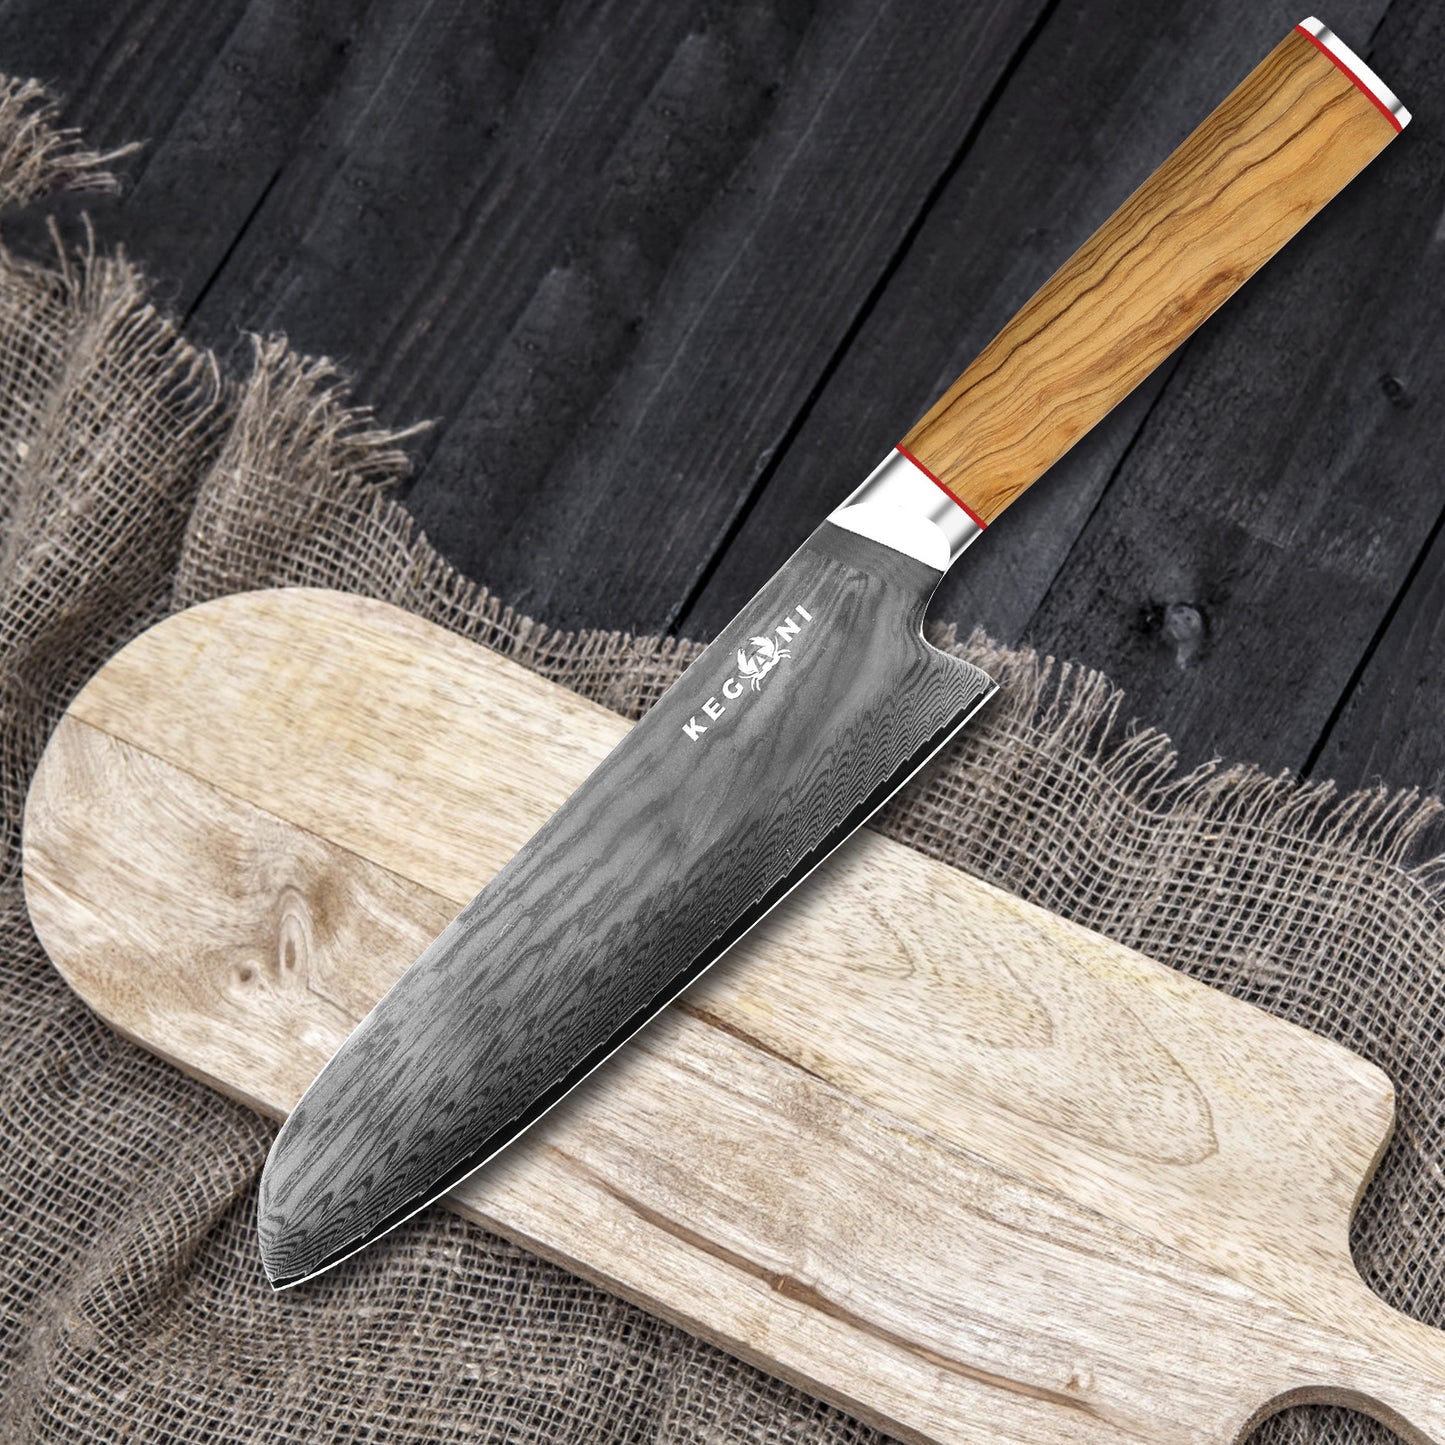 Kegani Kiritsuke Knife - 8 Inch Professional Japanese Chef's Knife, 67 Layers AUS-10 Damascus Steel Kitchen Ultra-Sharp Knife - D-Shaped Handle